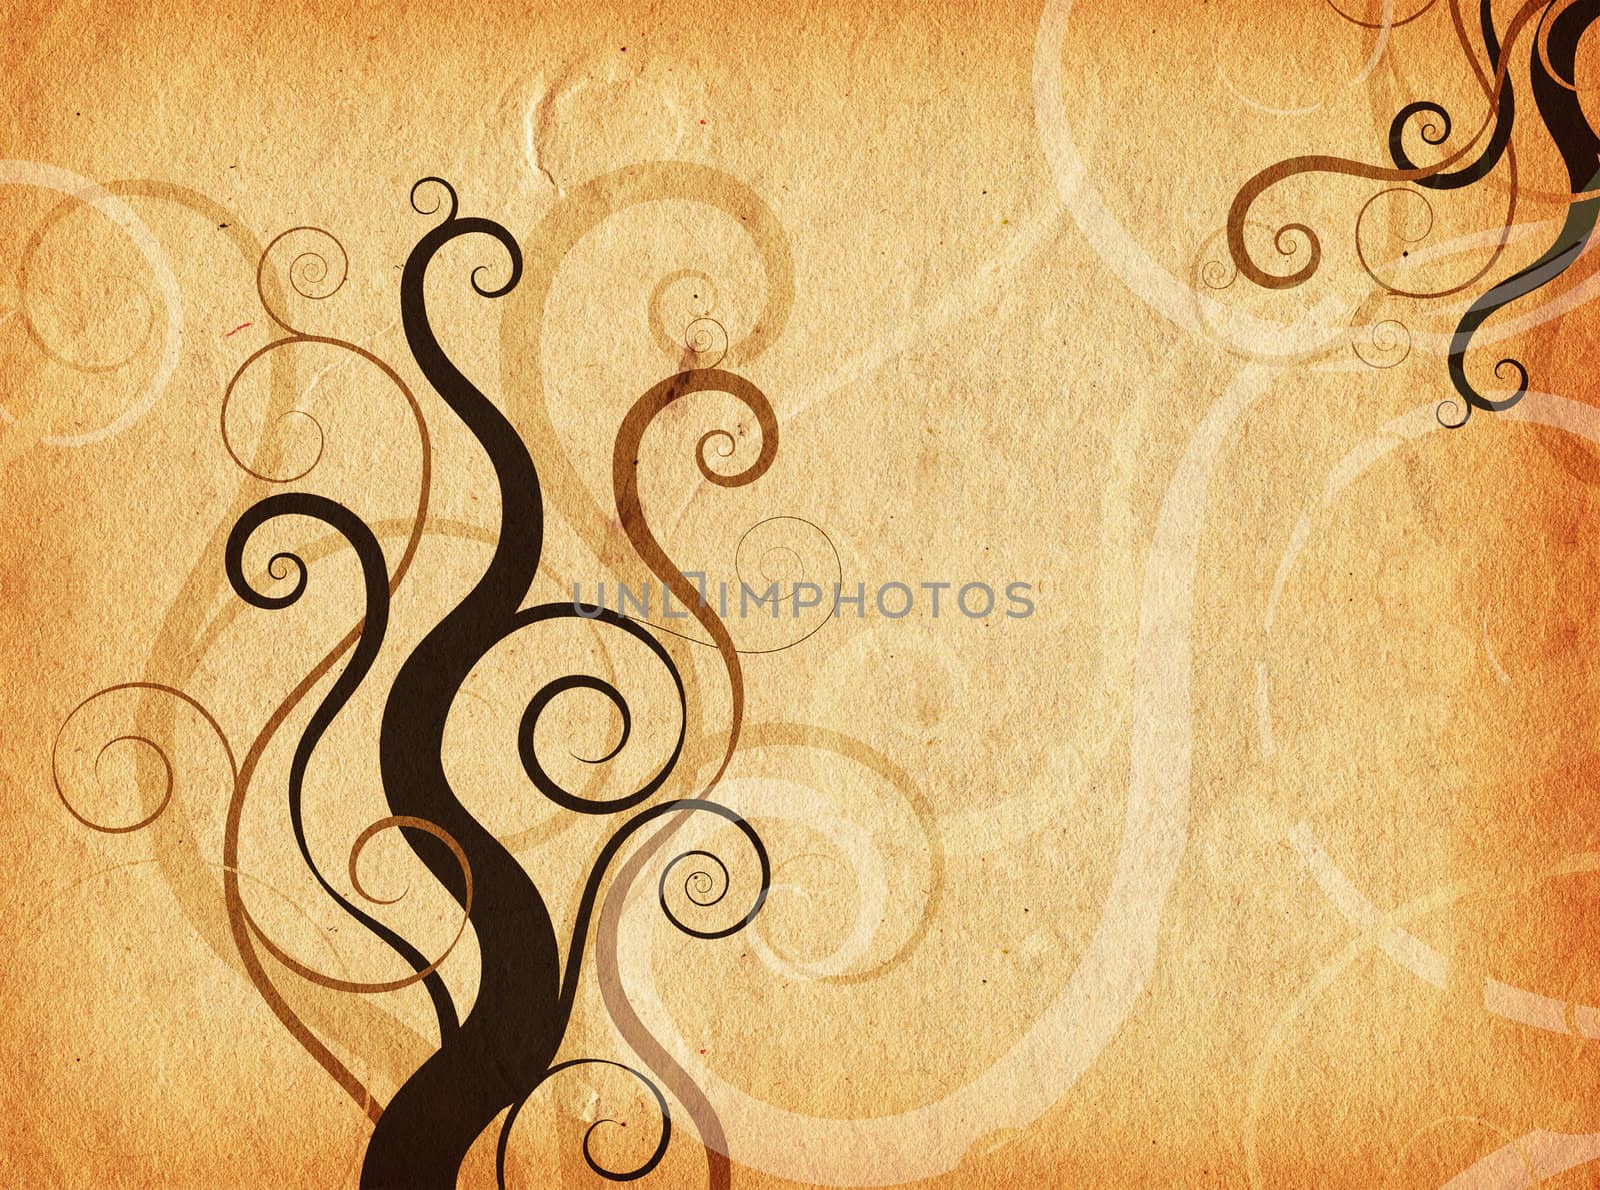 Grunge swirls and curls by kjpargeter